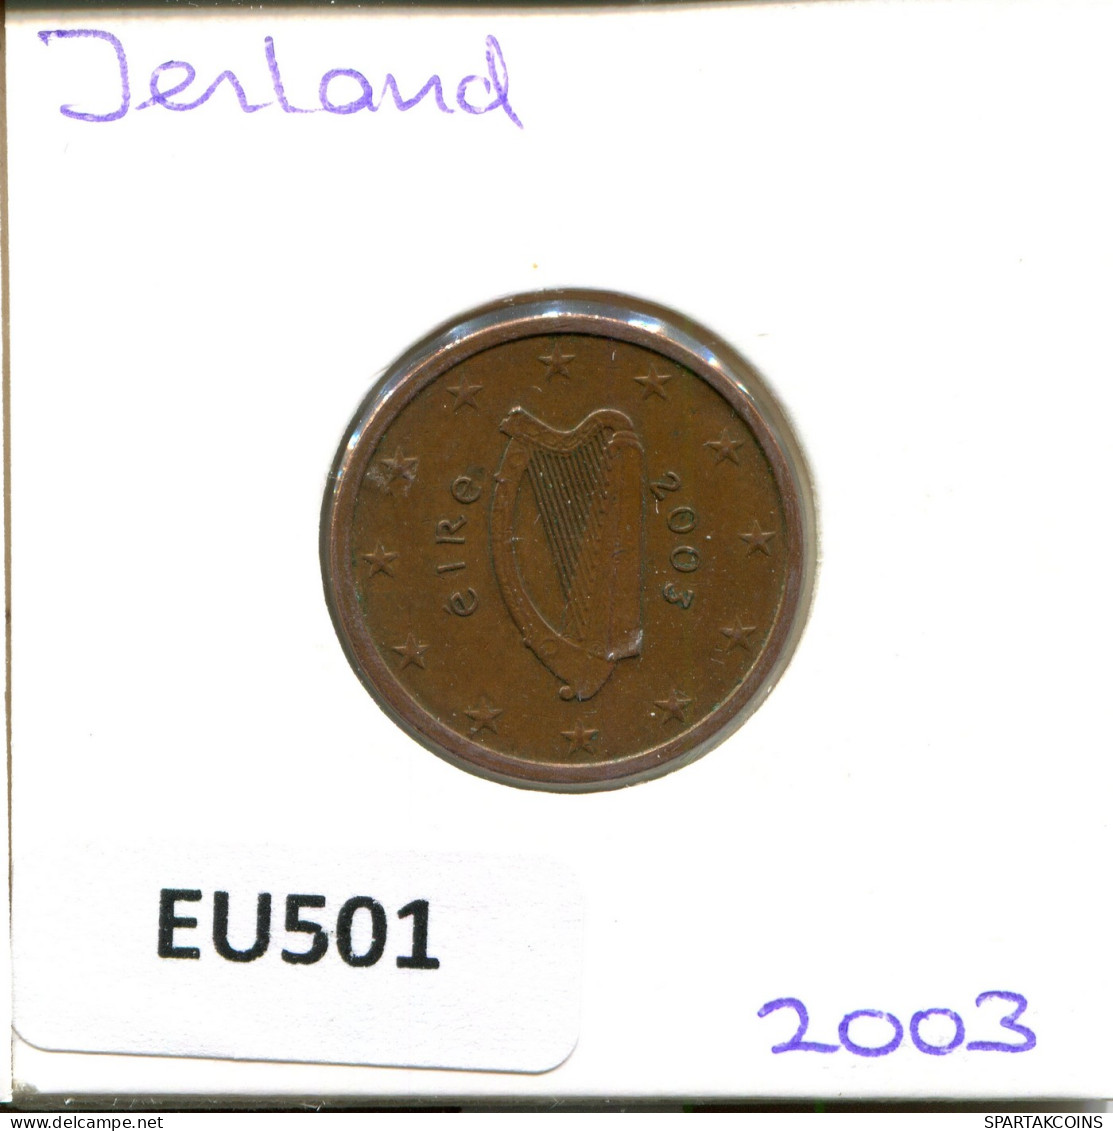 5 EURO CENTS 2003 IRLANDA IRELAND Moneda #EU501.E - Irlanda